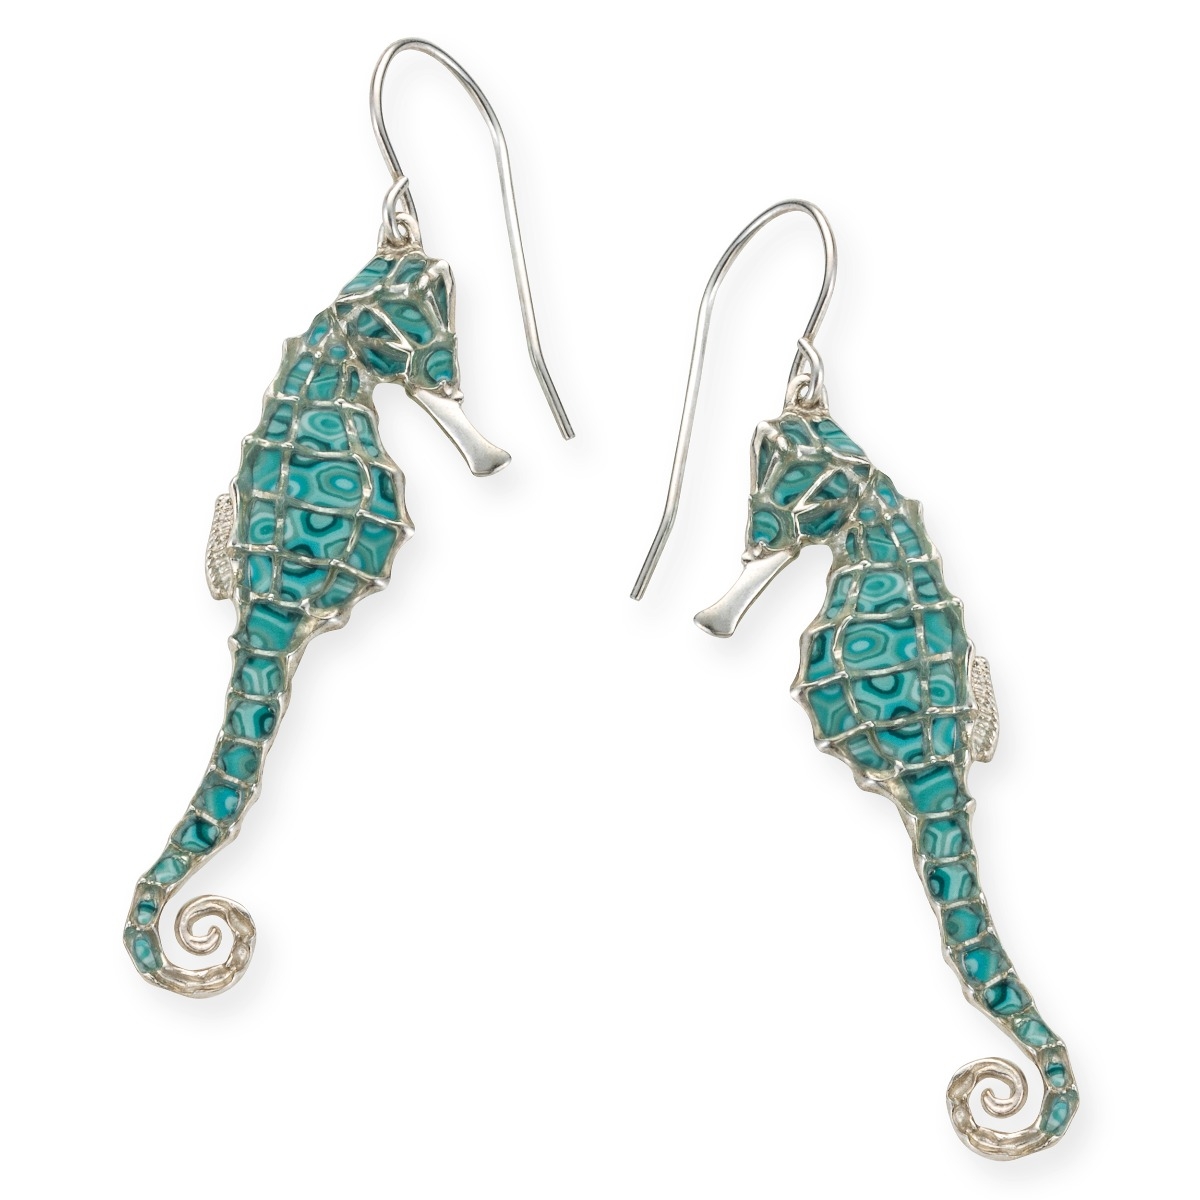 Adina Plastelina 925 Sterling Silver Seahorse Earrings - Turquoise - 1